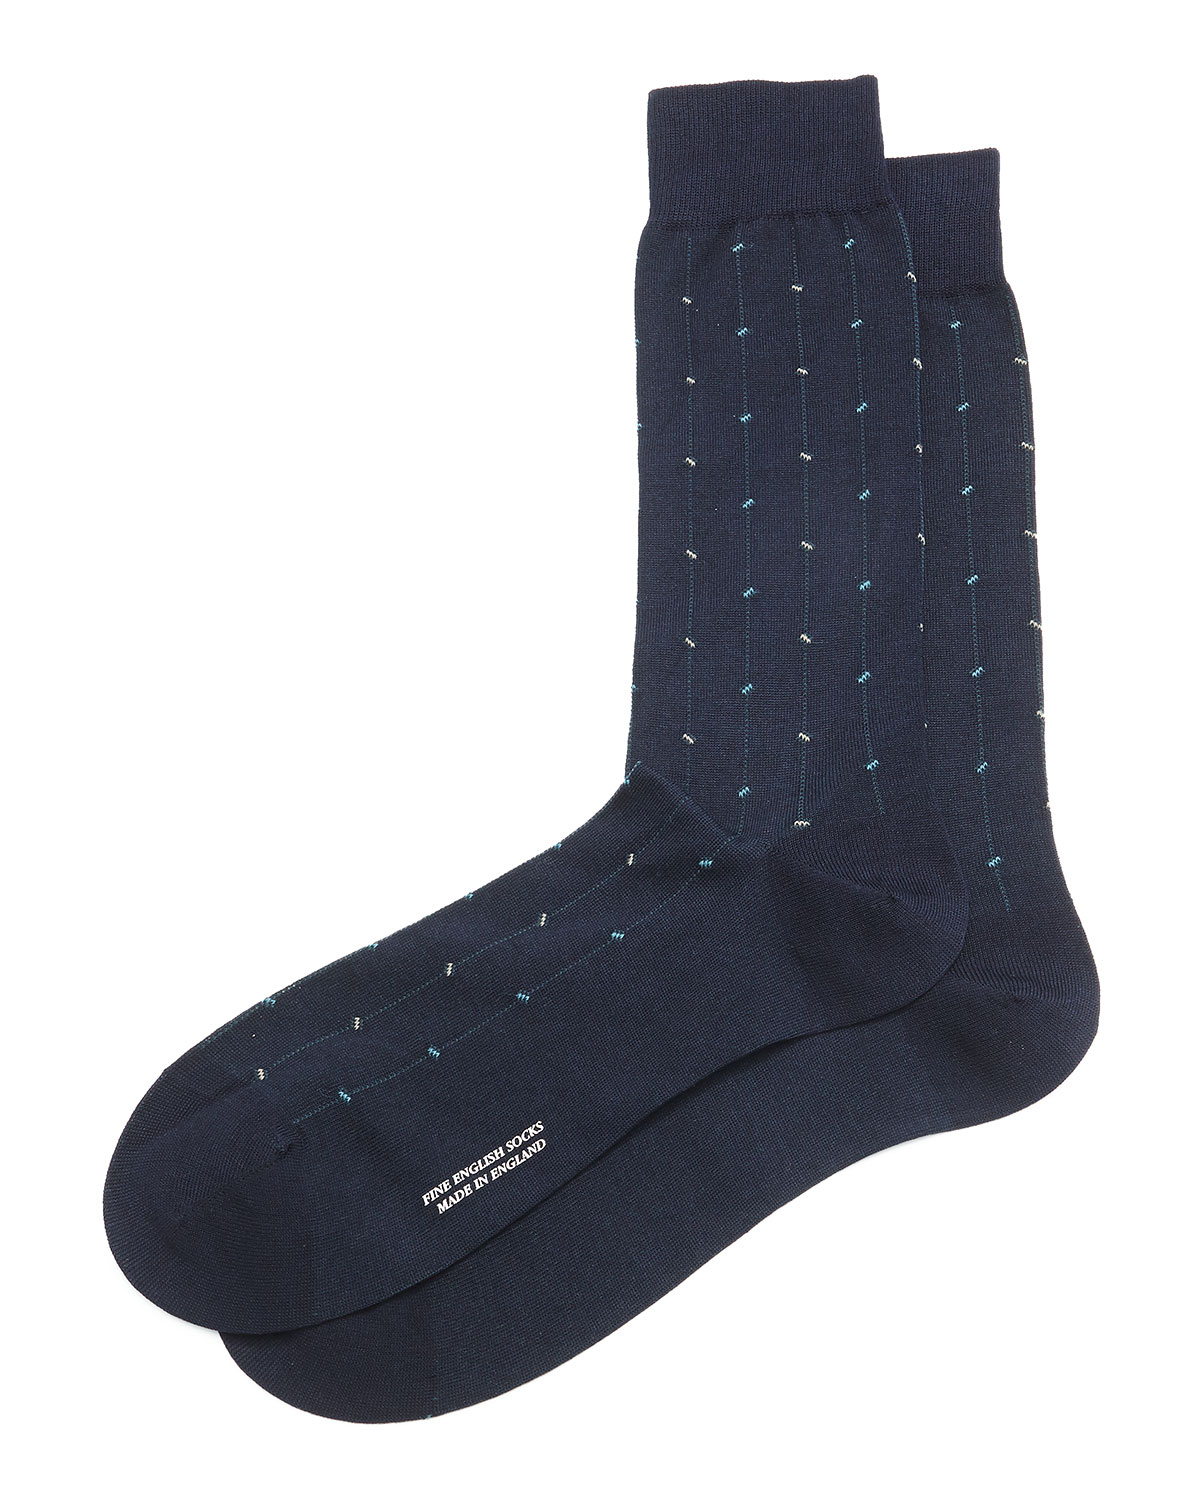 Lyst - Pantherella Mid-calf Diamond-dot Dress Socks in Blue for Men